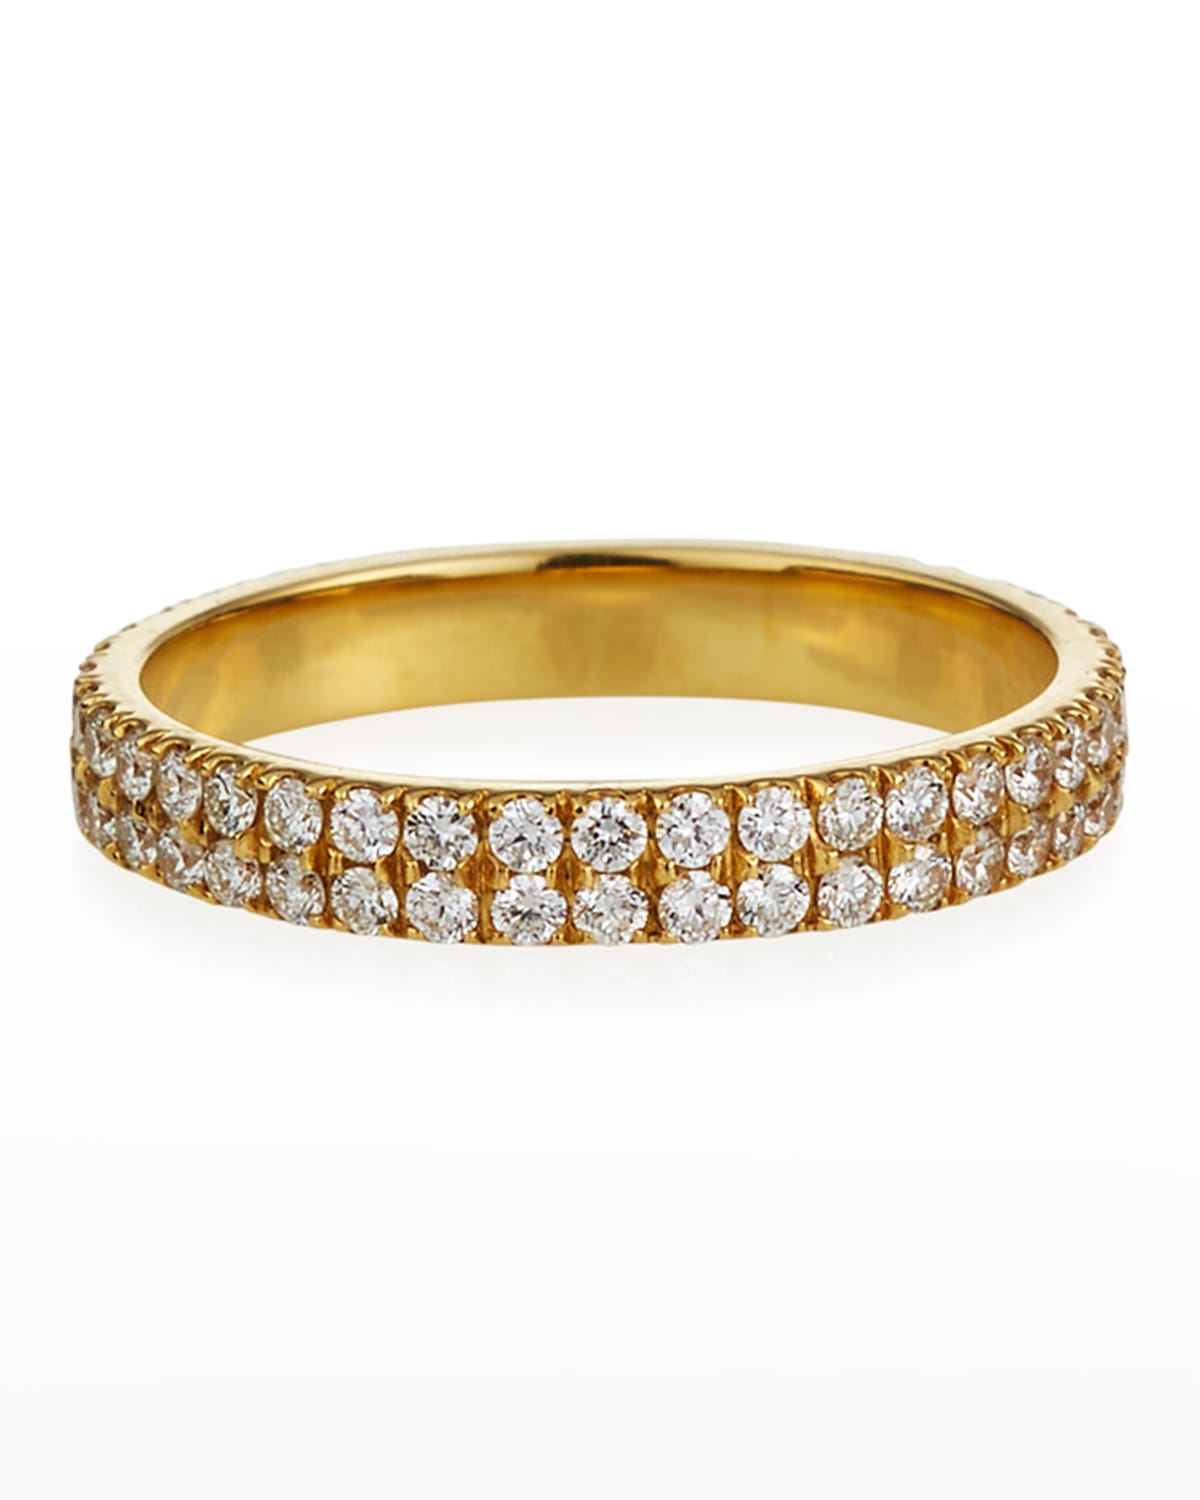 Fern Freeman Jewelry 18k Pave 2-Row Diamond Pinky Ring, Size 4